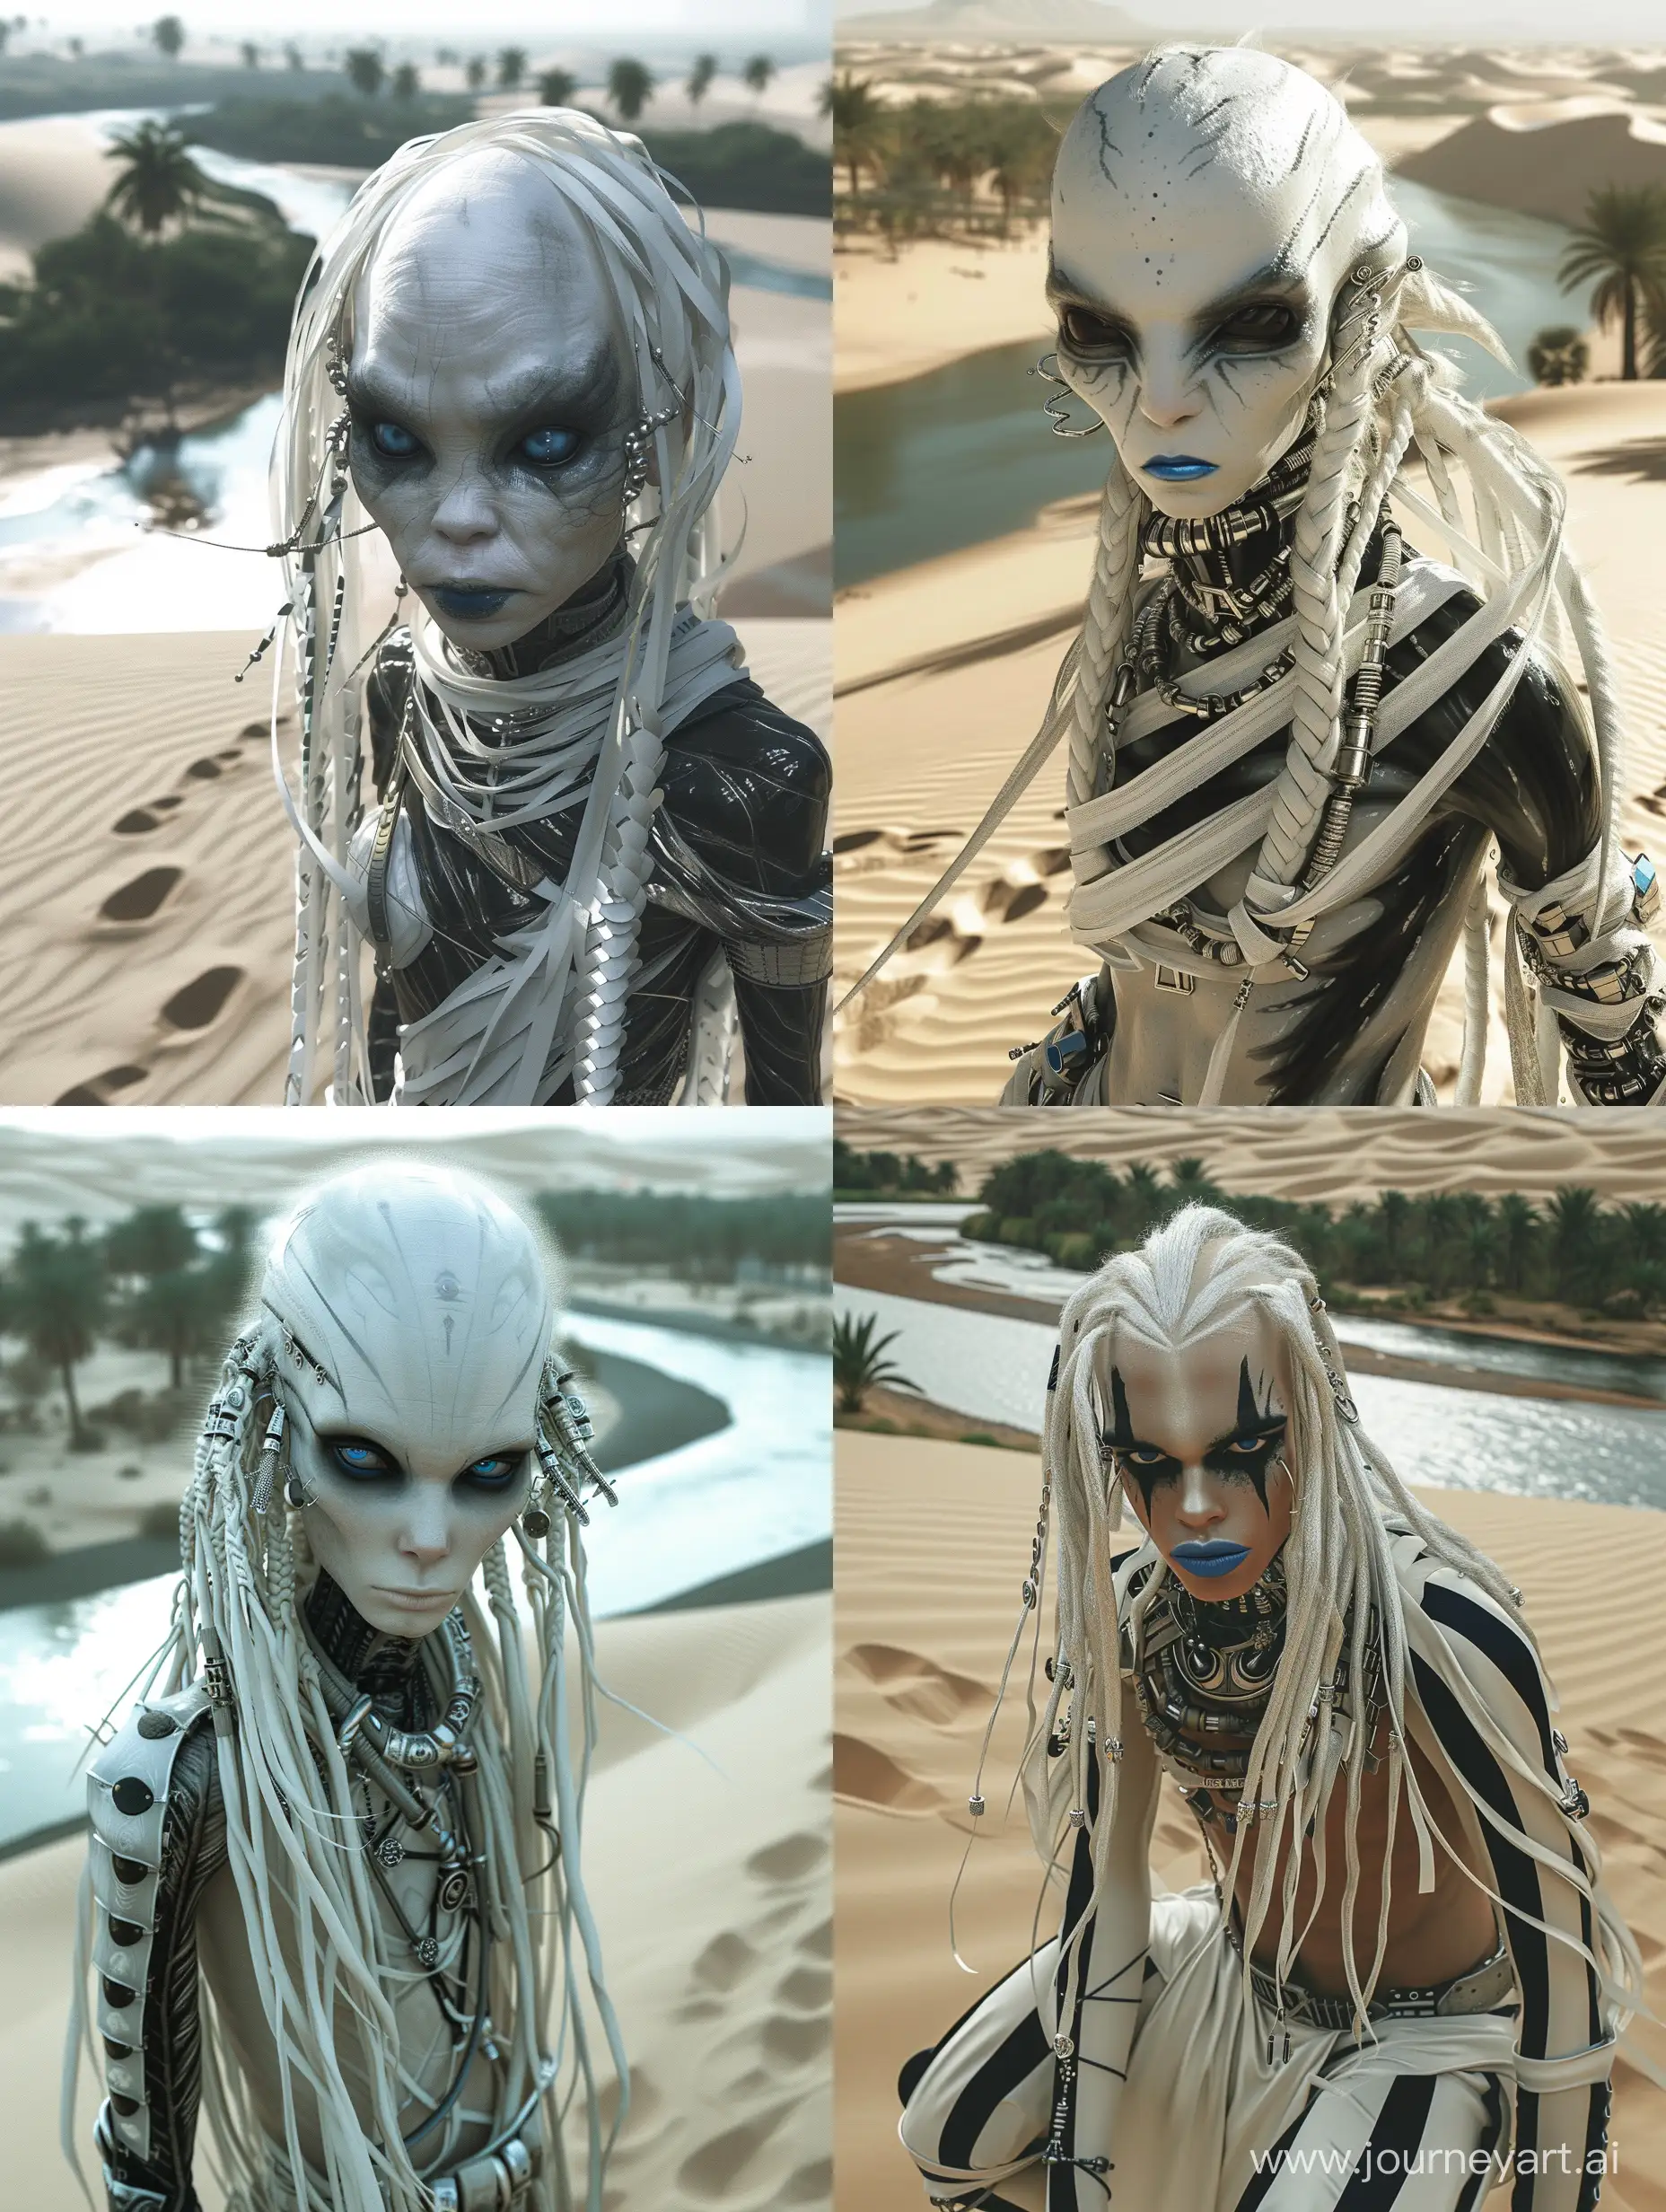 SilverHaired-Alien-Prince-Amidst-Desert-Dunes